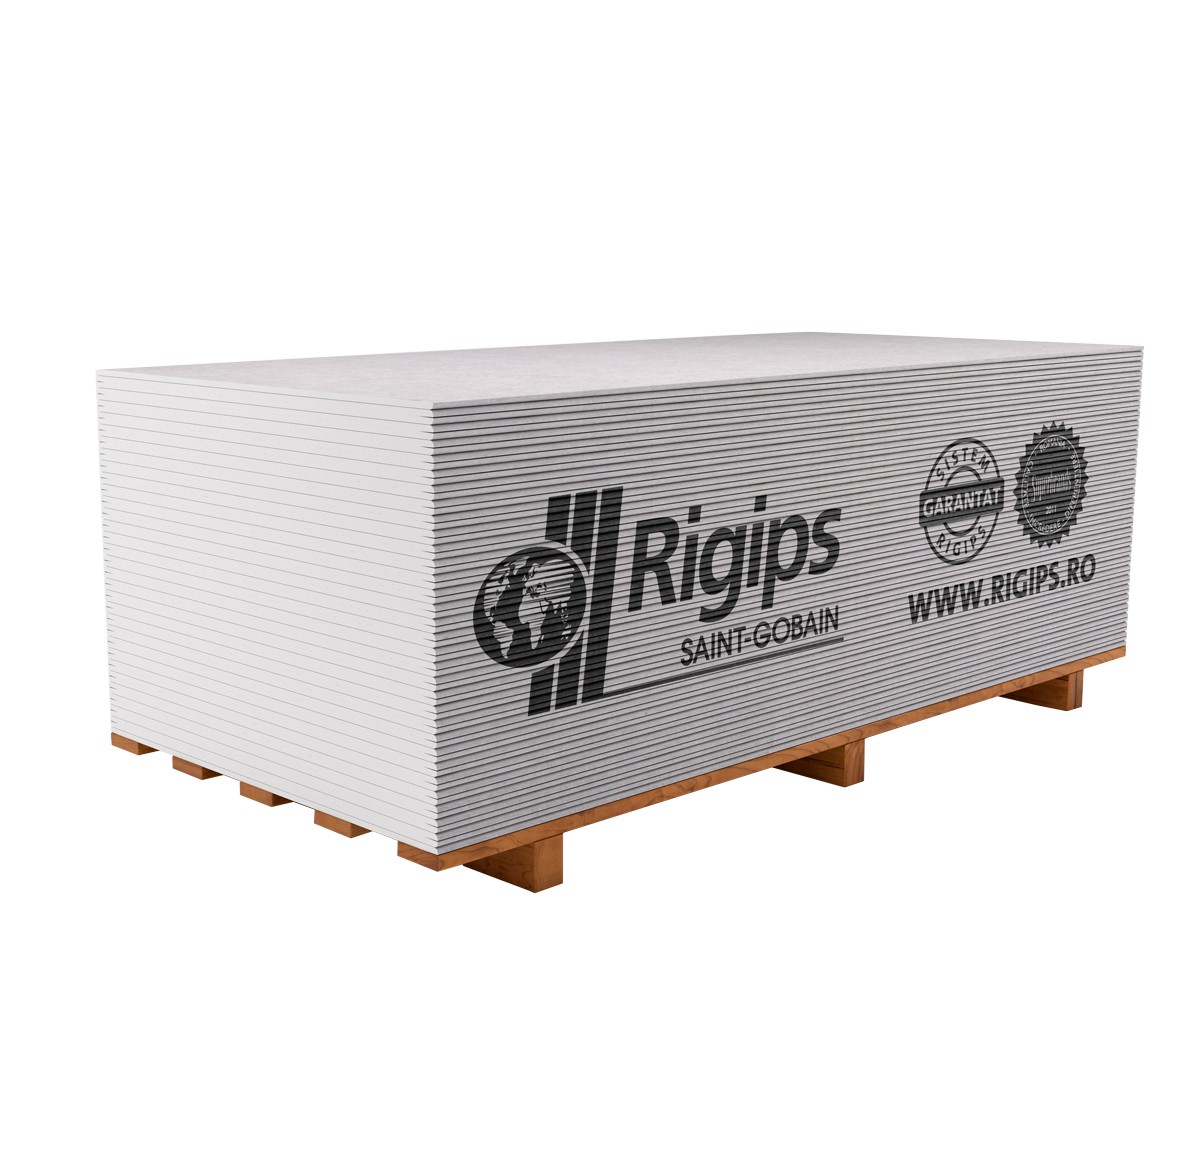 Common drywall tiles - Rigips RB 9.5 x 1200 x 2600 mm, maxbau.ro